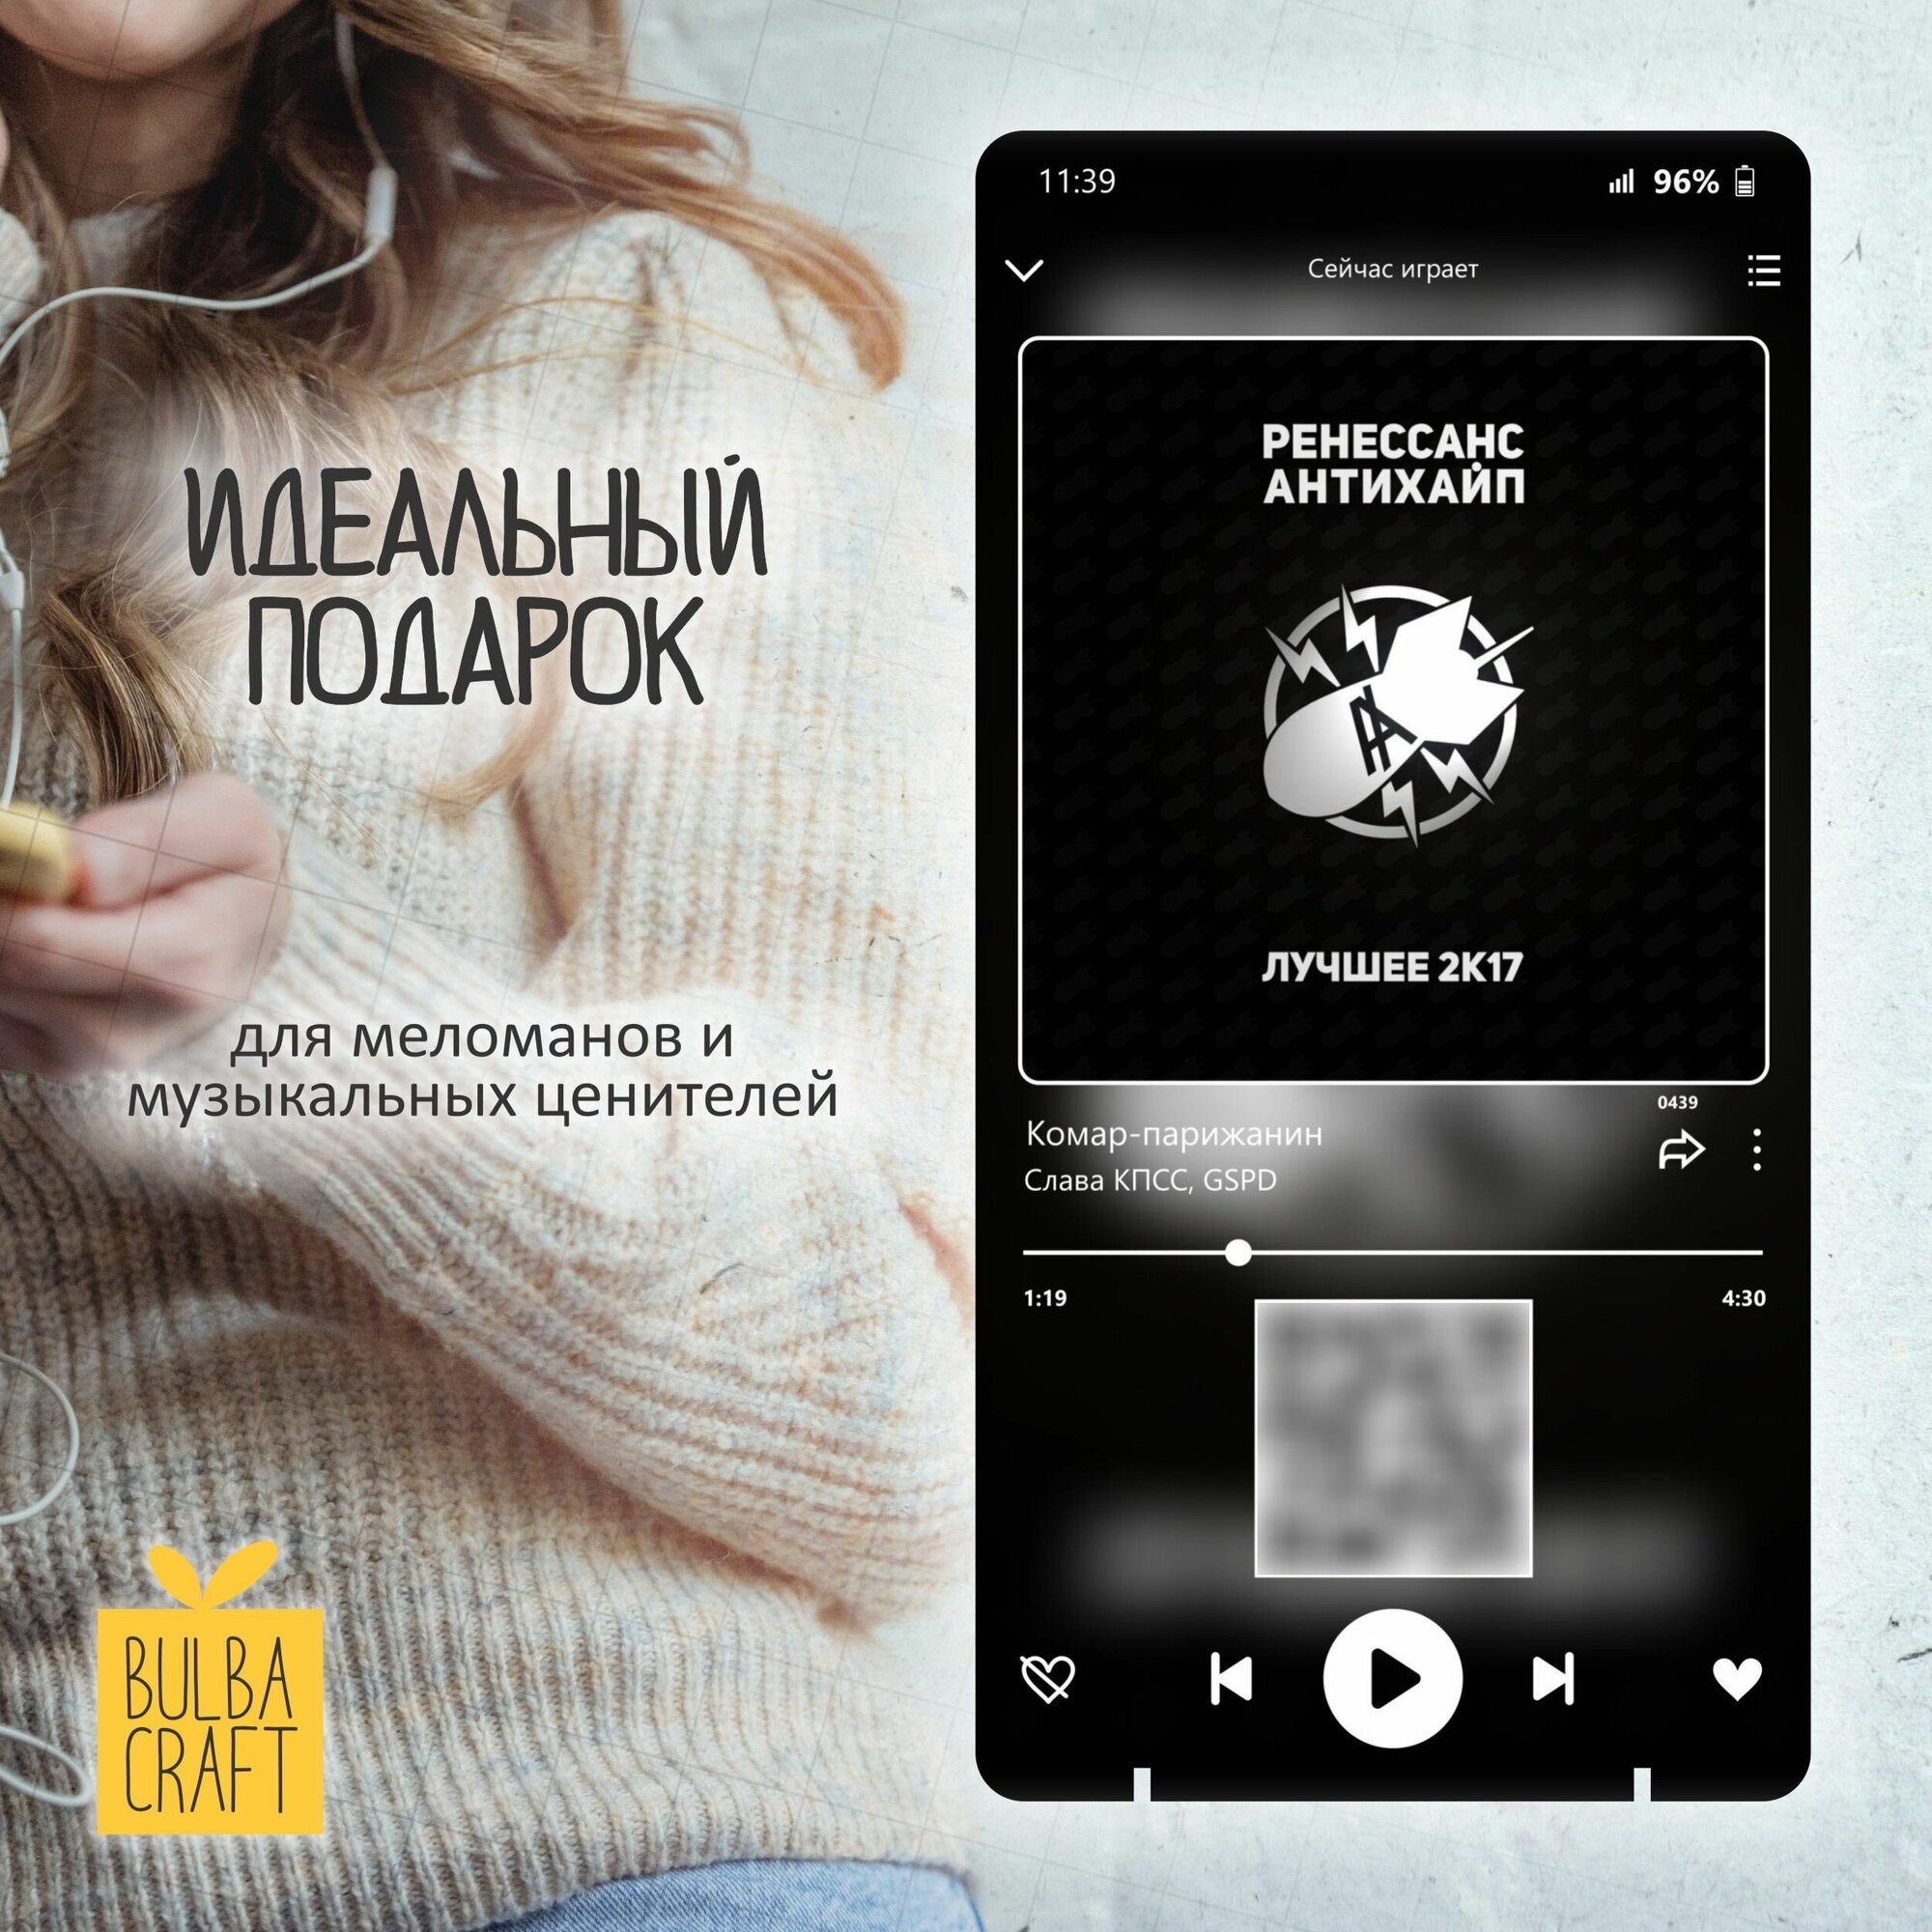 "Слава КПСС GSPD - Комар-парижанин" Spotify постер музыкальная рамка плакат пластинка подарок Bulbacraft (10х20см)